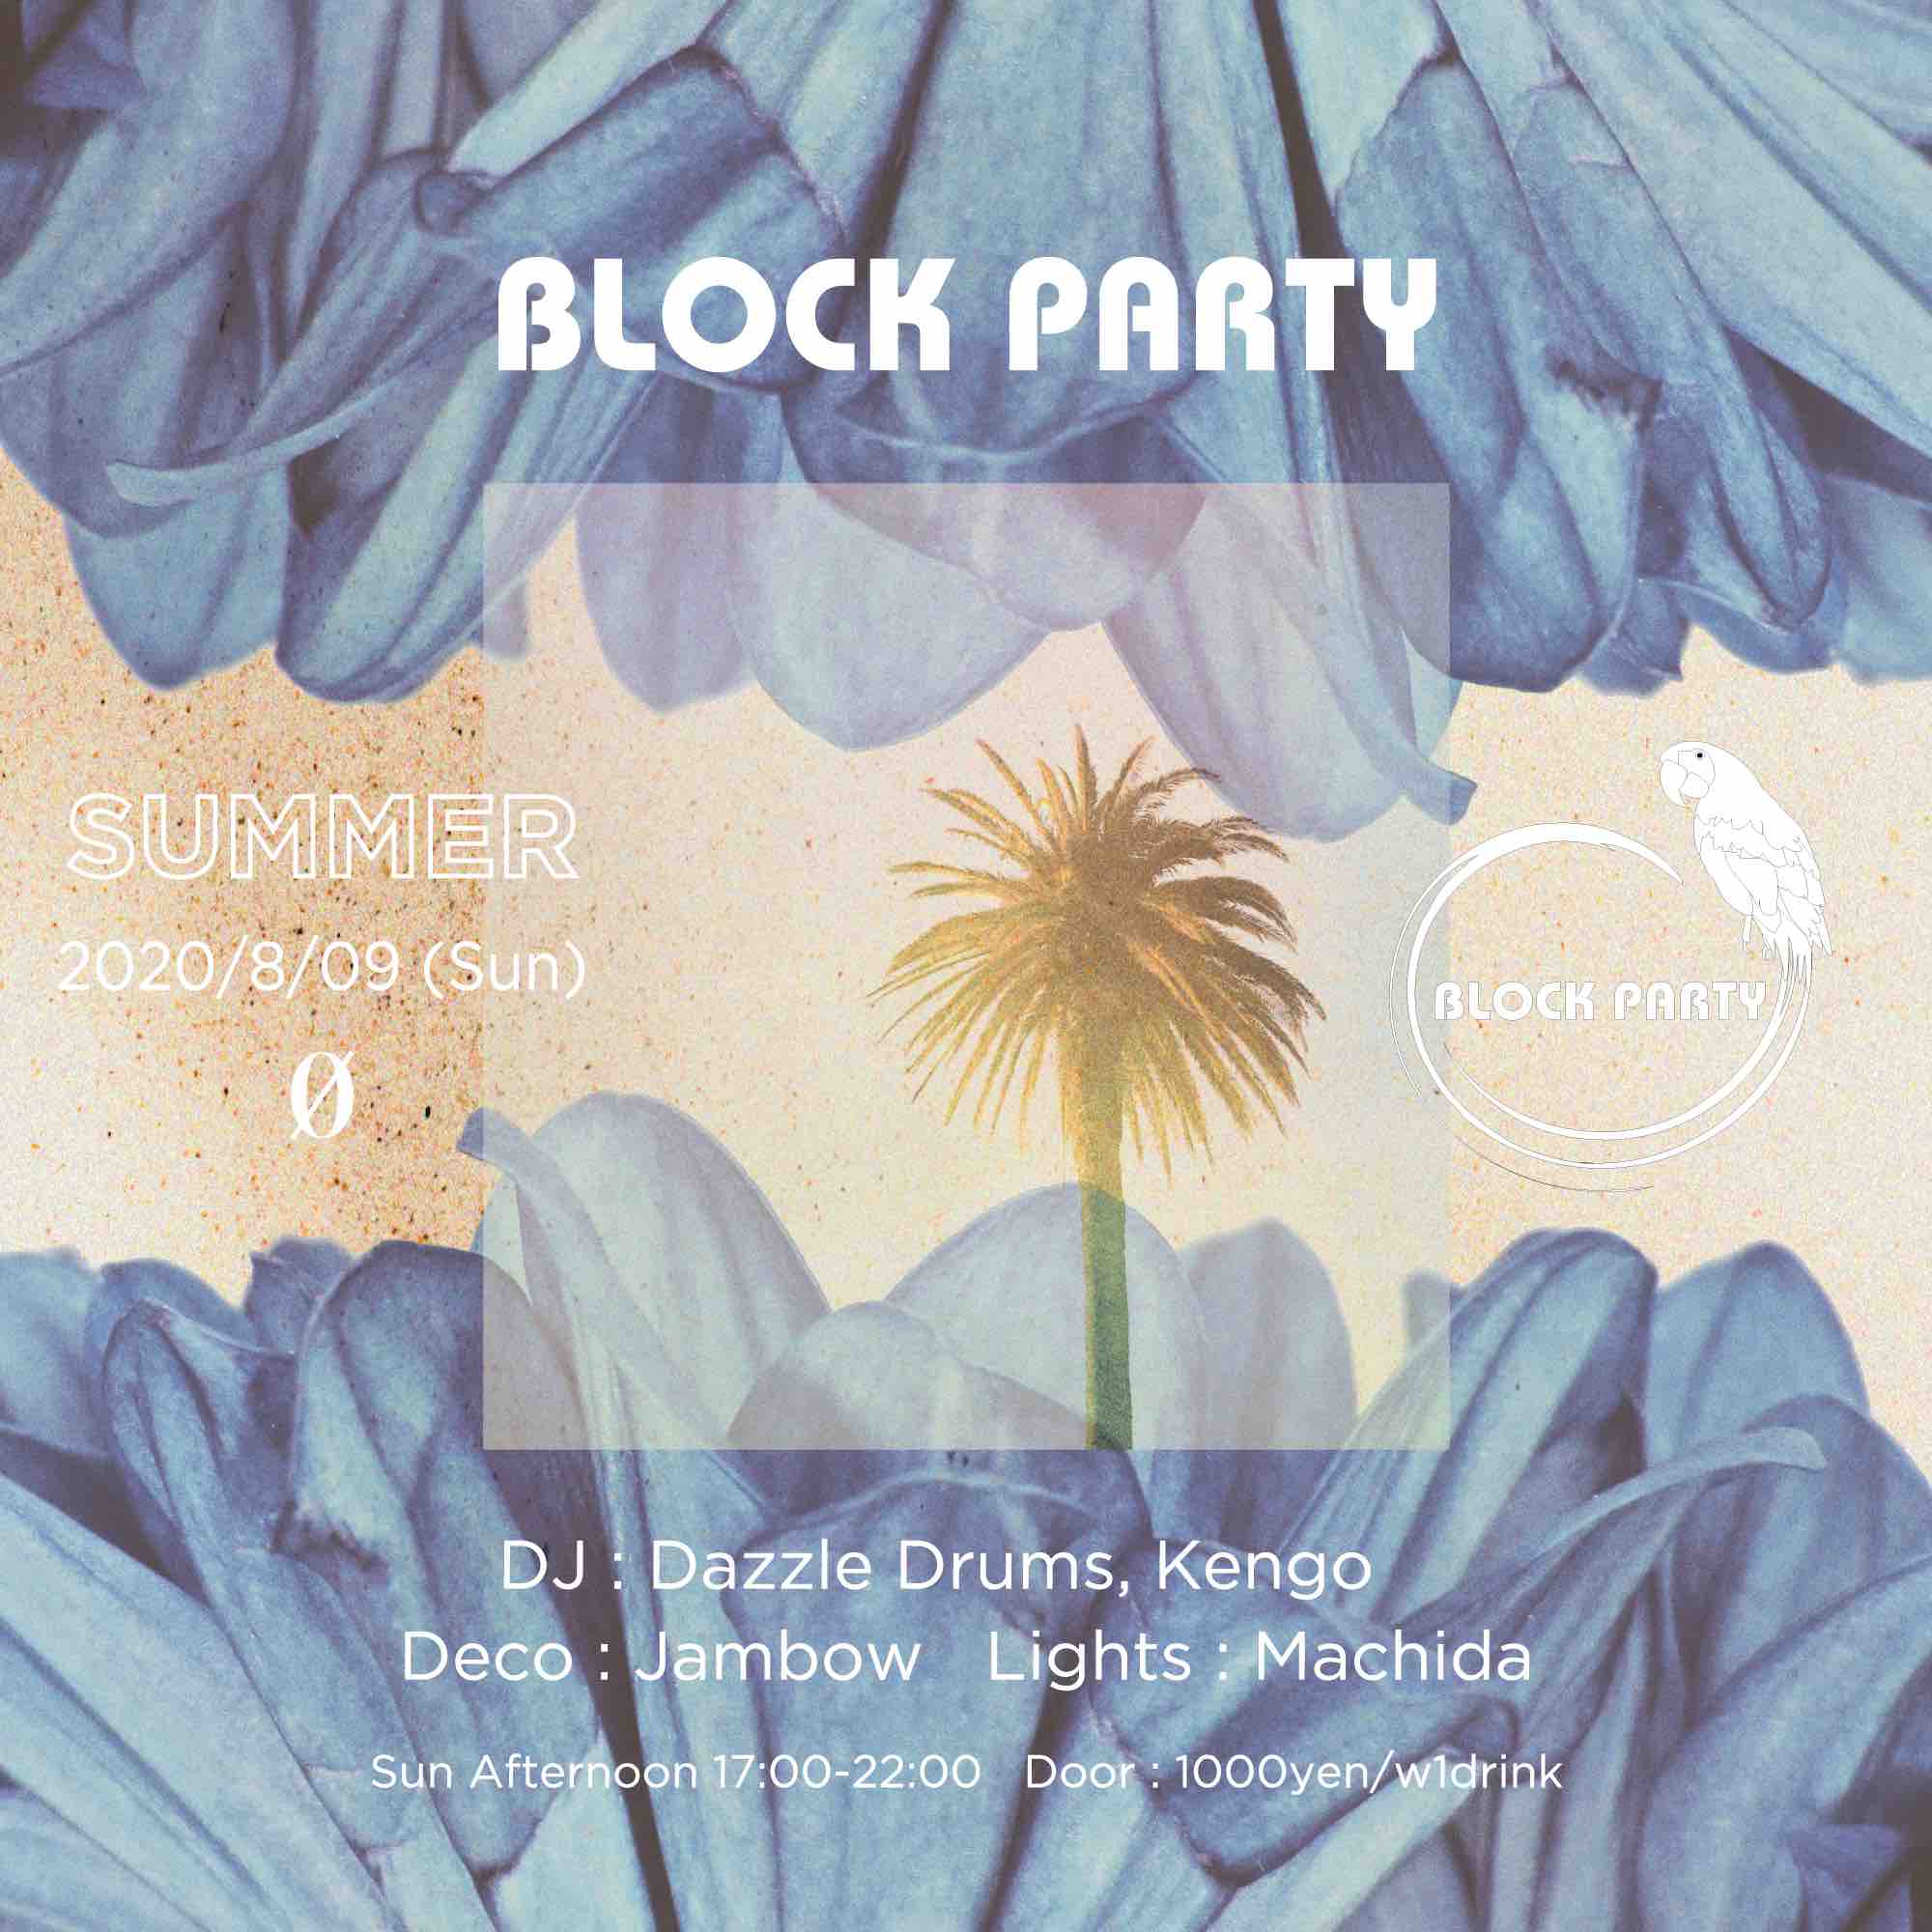 Block Party “Summer”